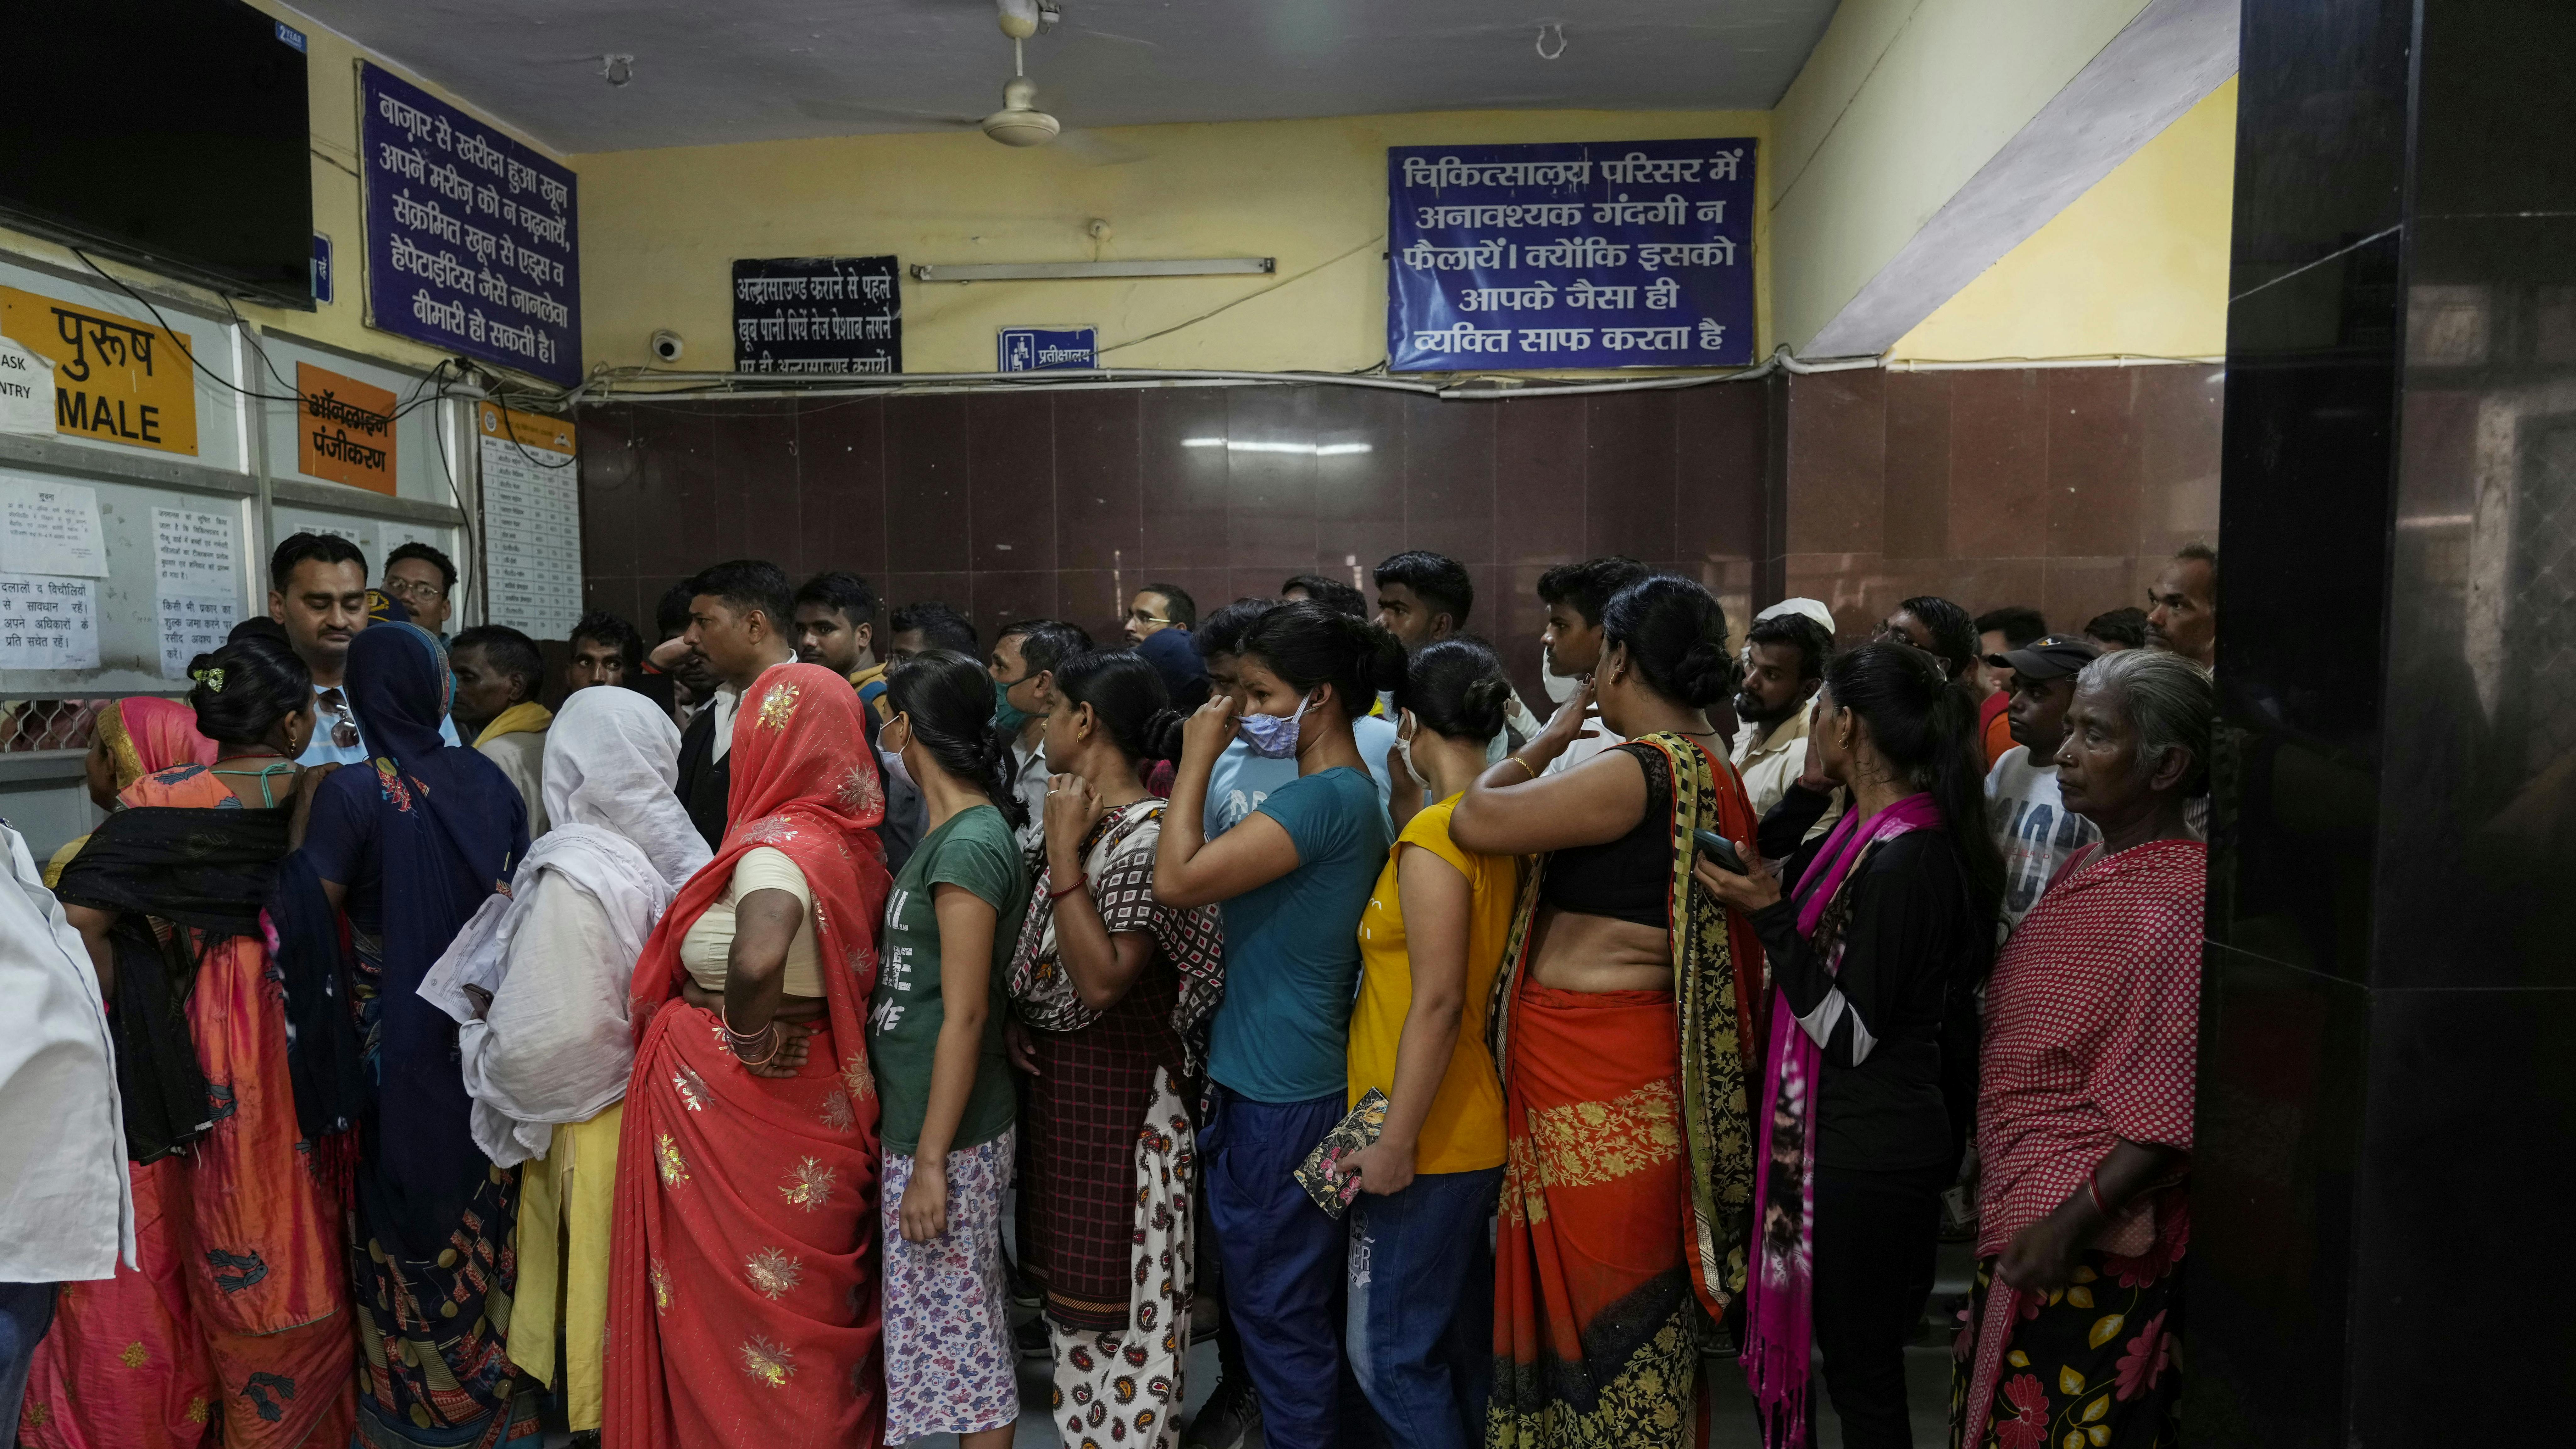 Folk stimler sammen på&nbsp;Tej Bahadur Sapru Hospital i Prayagraj for at modtage behandling under hedebølgen.&nbsp;

&nbsp;
